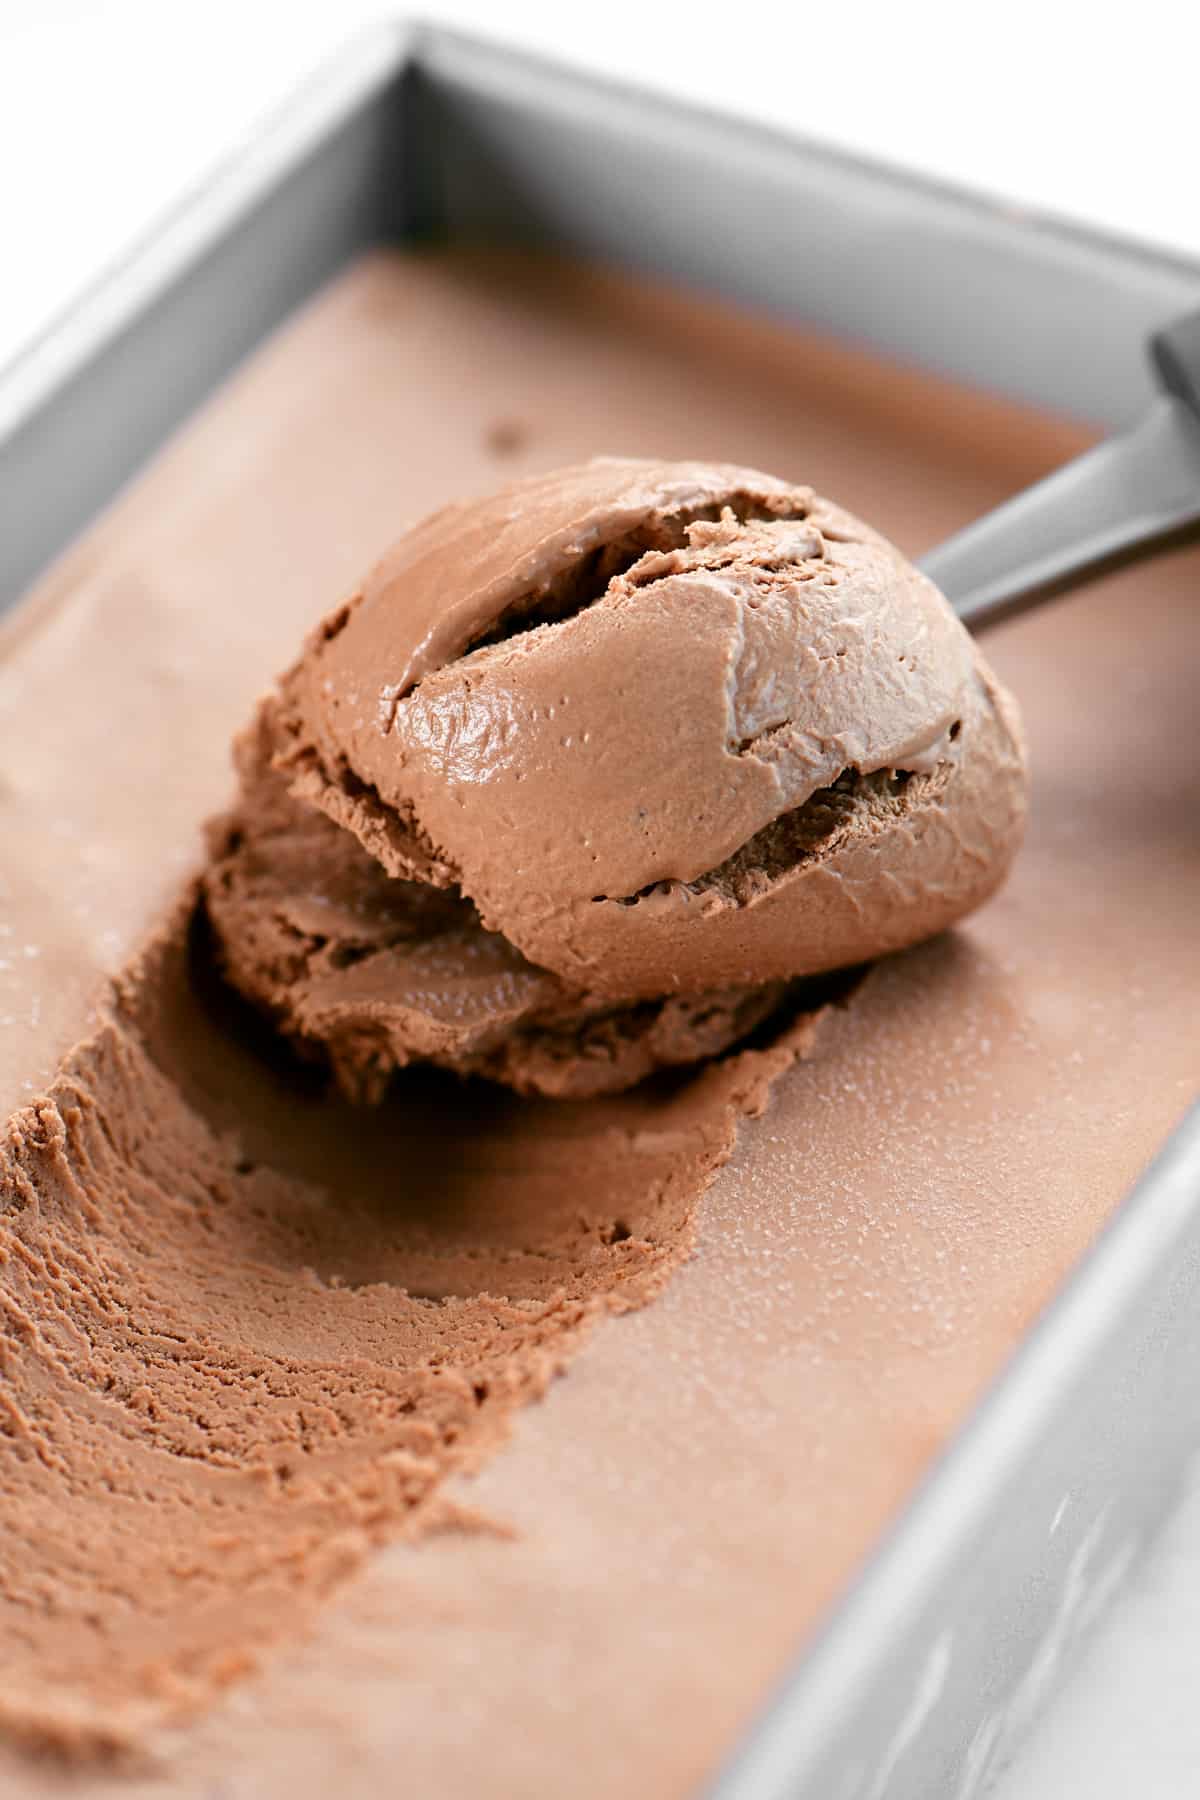 A scoop of no churn chocolate ice cream.